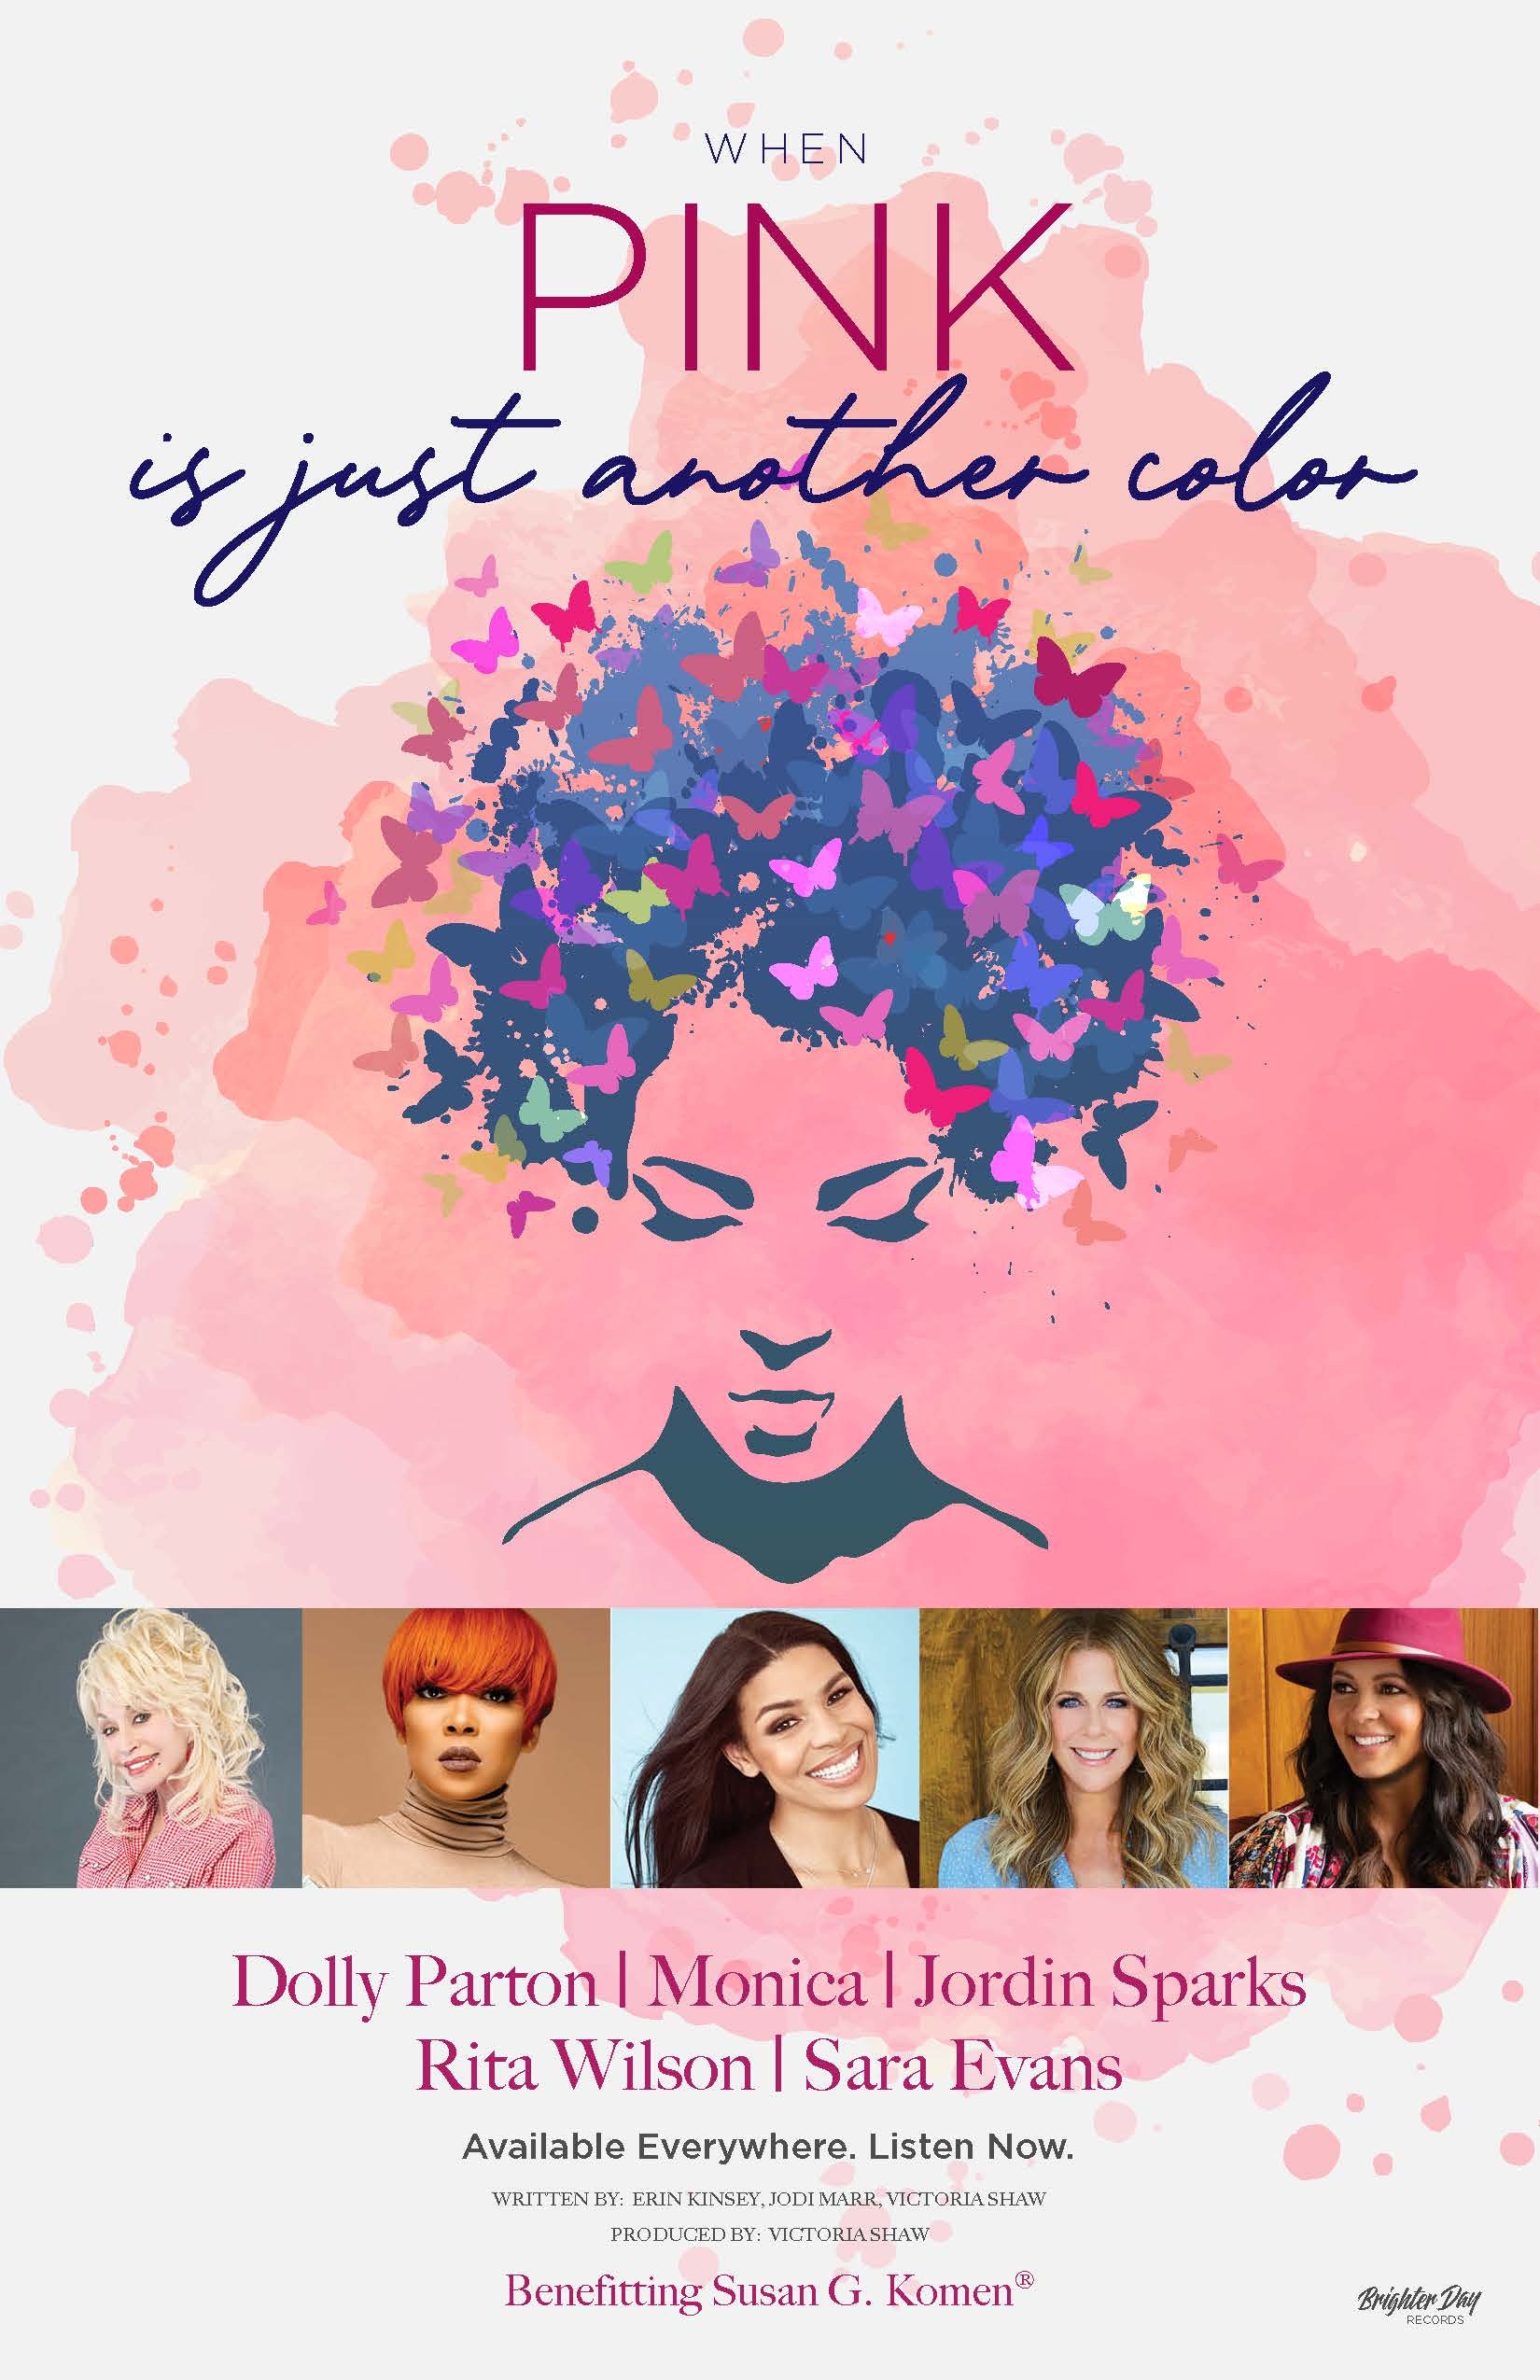 "Pink" Song - Dolly Parton, Monica, Jordin Sparks, Rita Wilson & Sara Evans